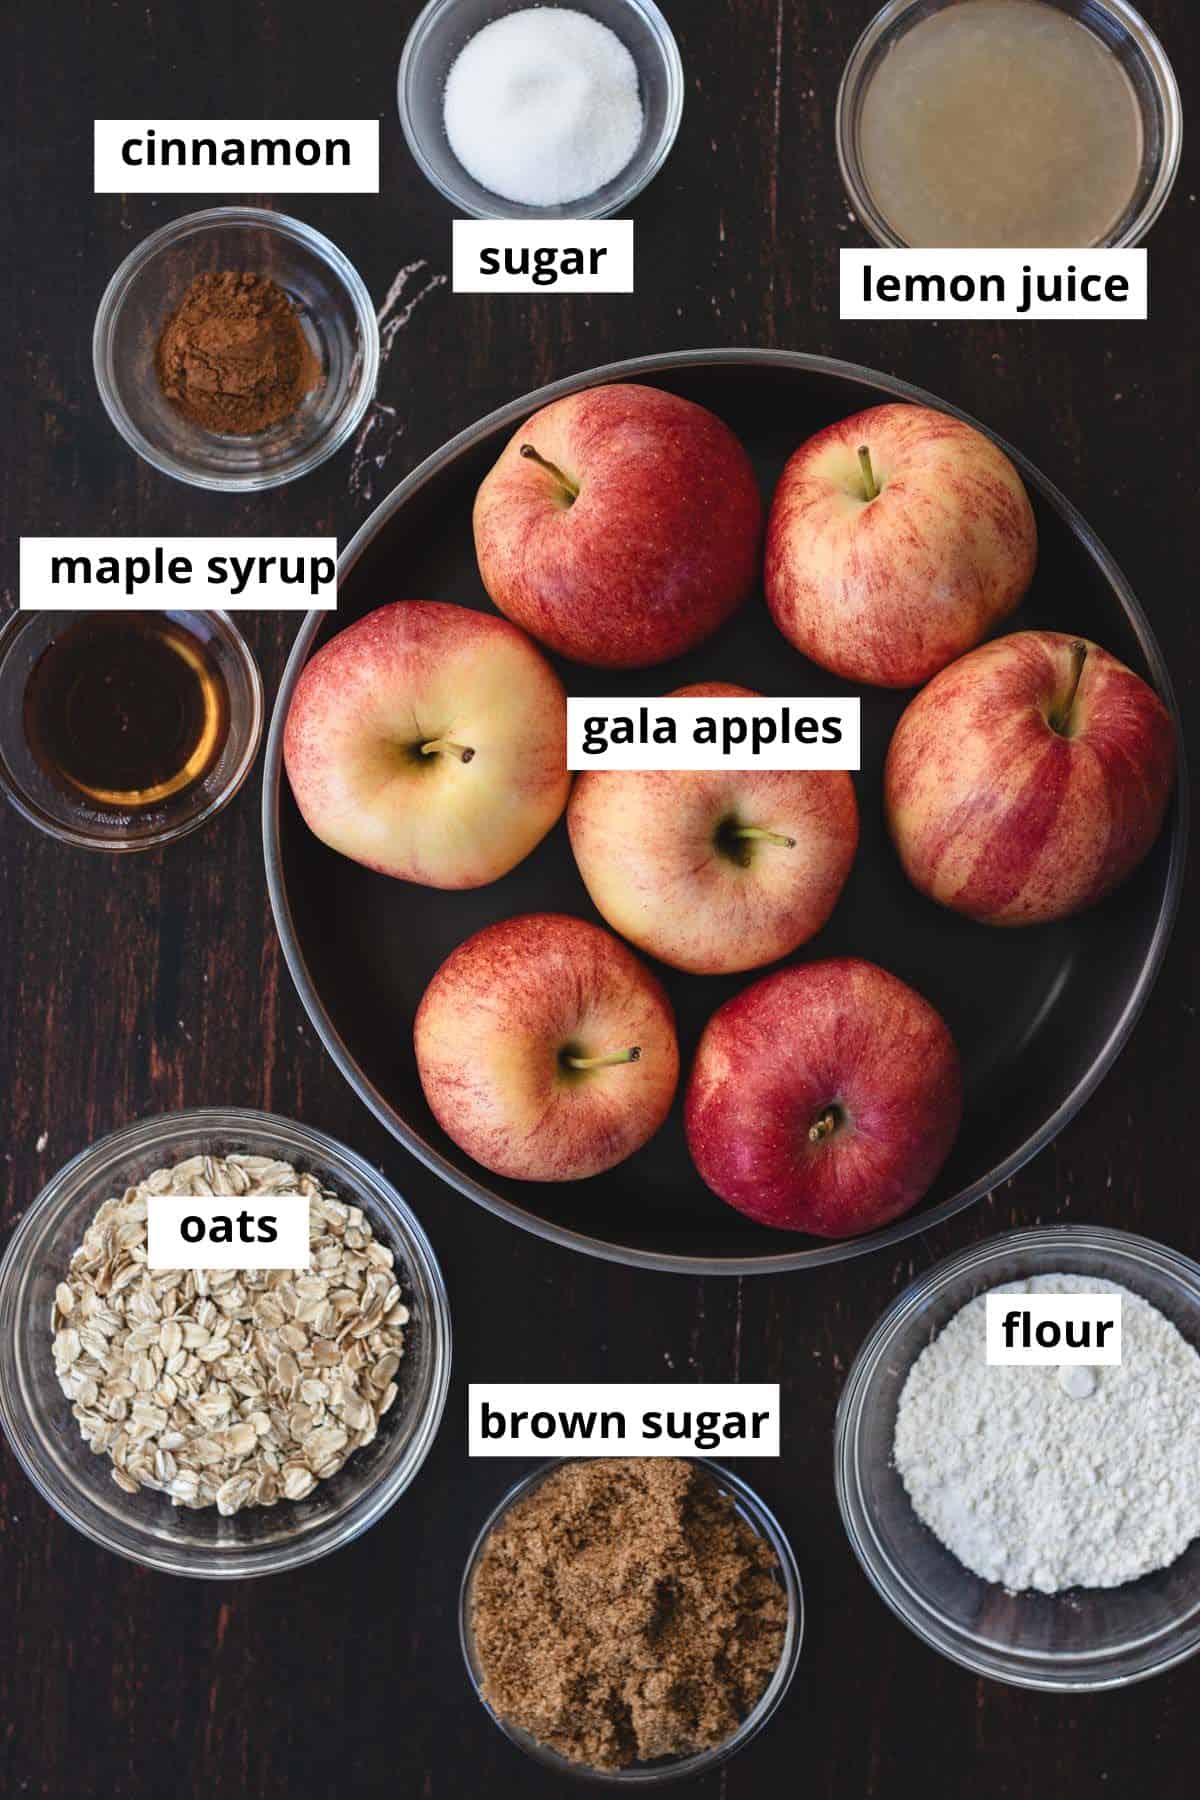 Ingredient list: cinnamon, sugar, lemon juice, maple syrup, apples, oats, brown sugar, and flour.